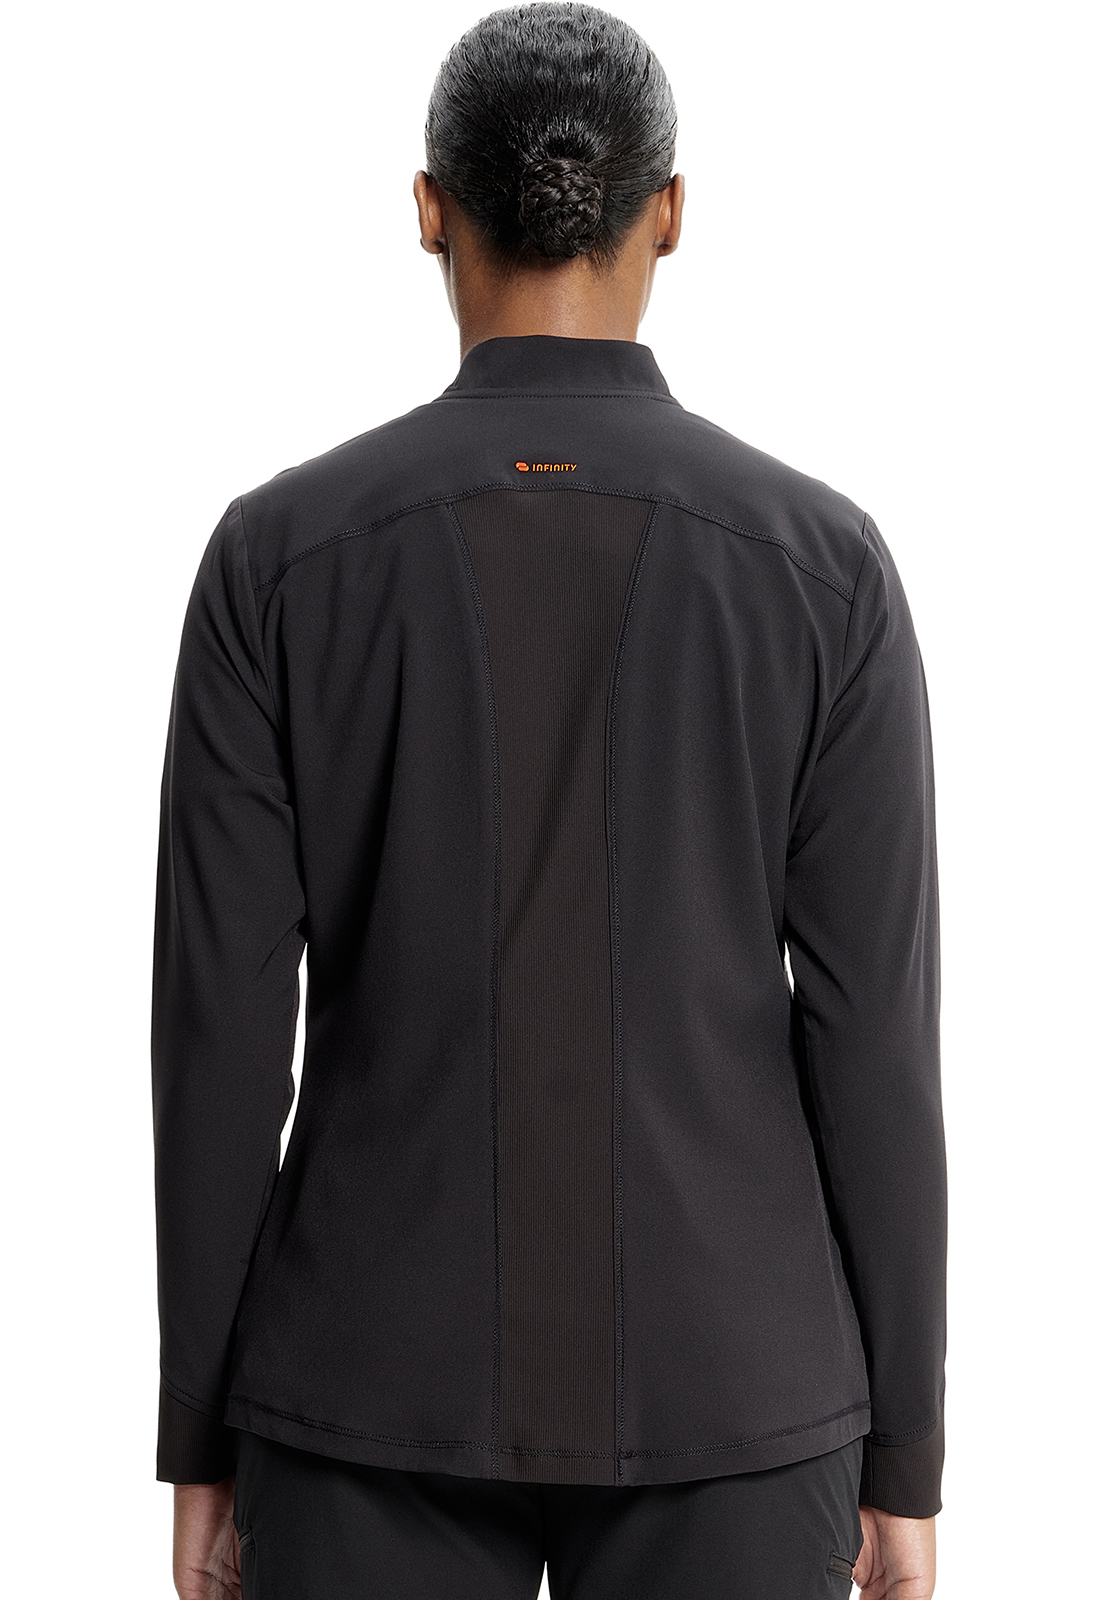 Buy Infinity GNR8 Zip Front Jacket - CU_Infinity Online at Best price - NC